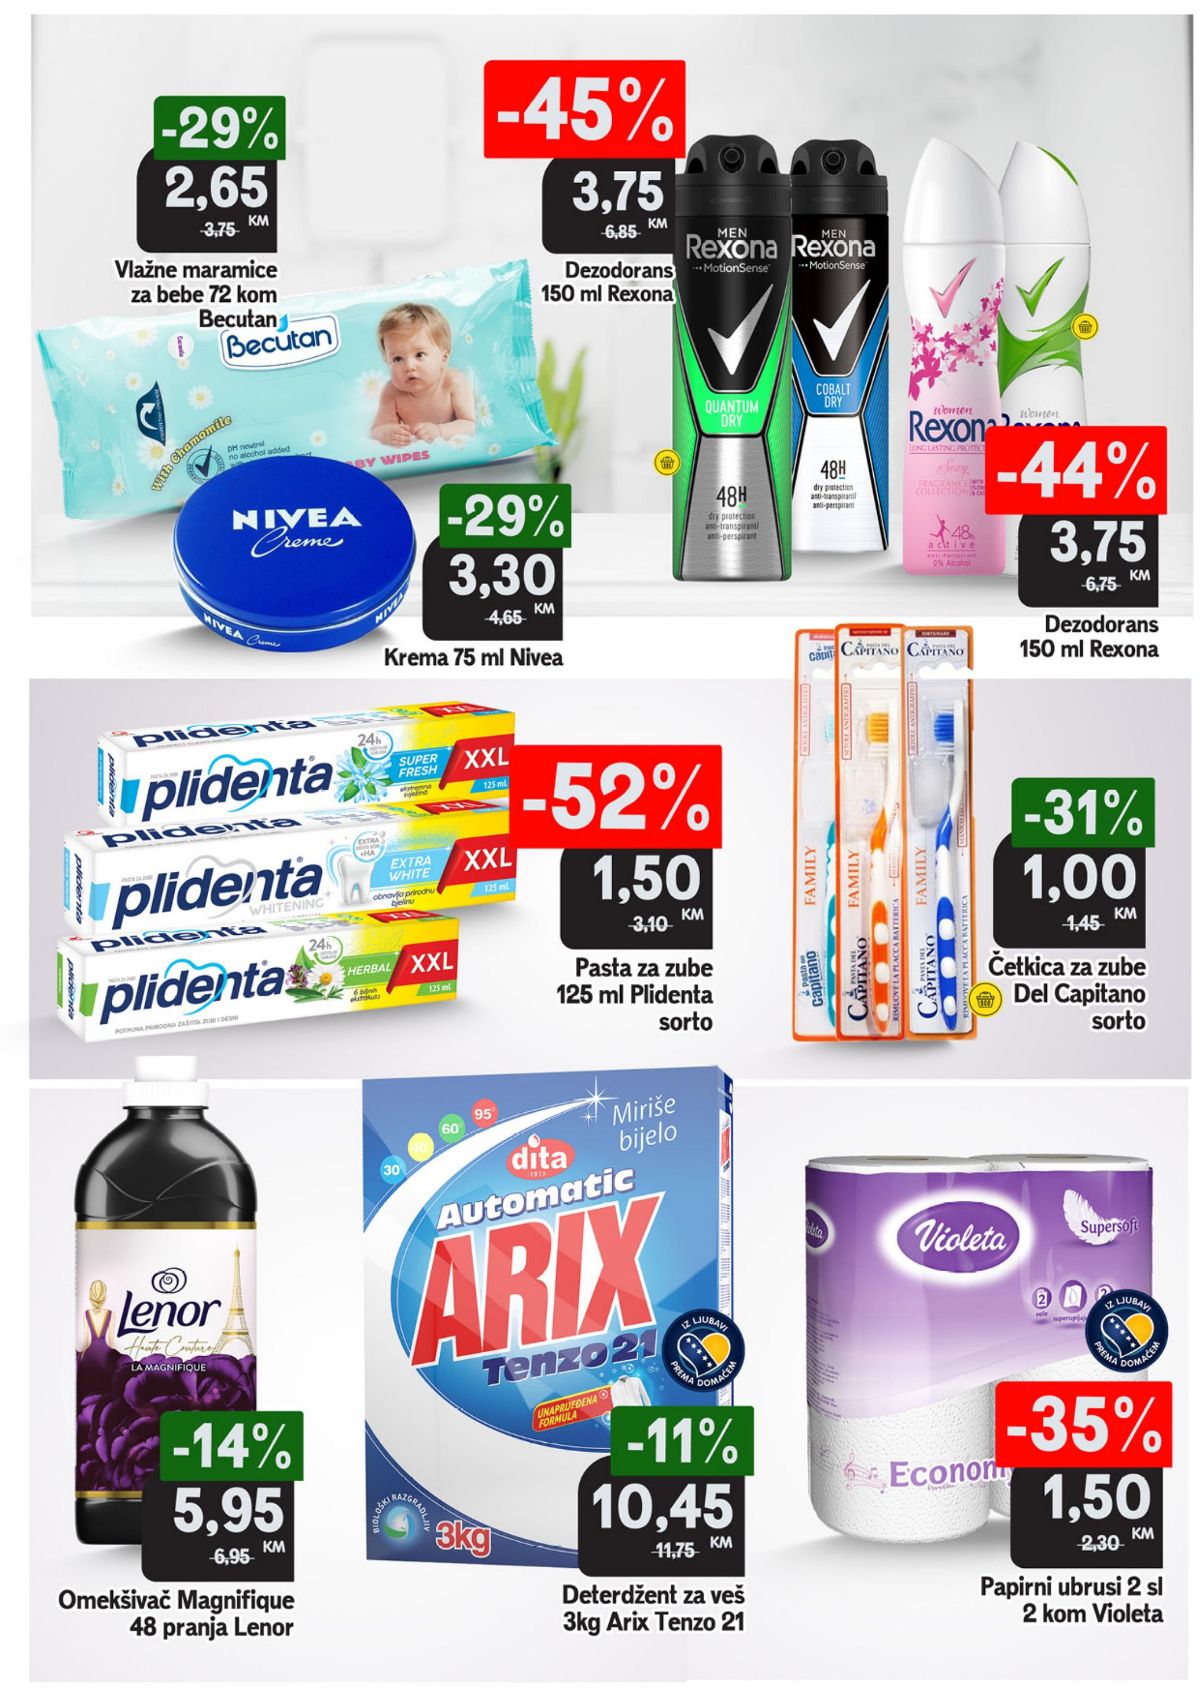 Bingo vikend akcija od 23.03. do 23.06.2023. 008 Rexona dezodorans akcija sa 45% popusta, Plidenta pasta za zube snizena čak 52% u Bingu